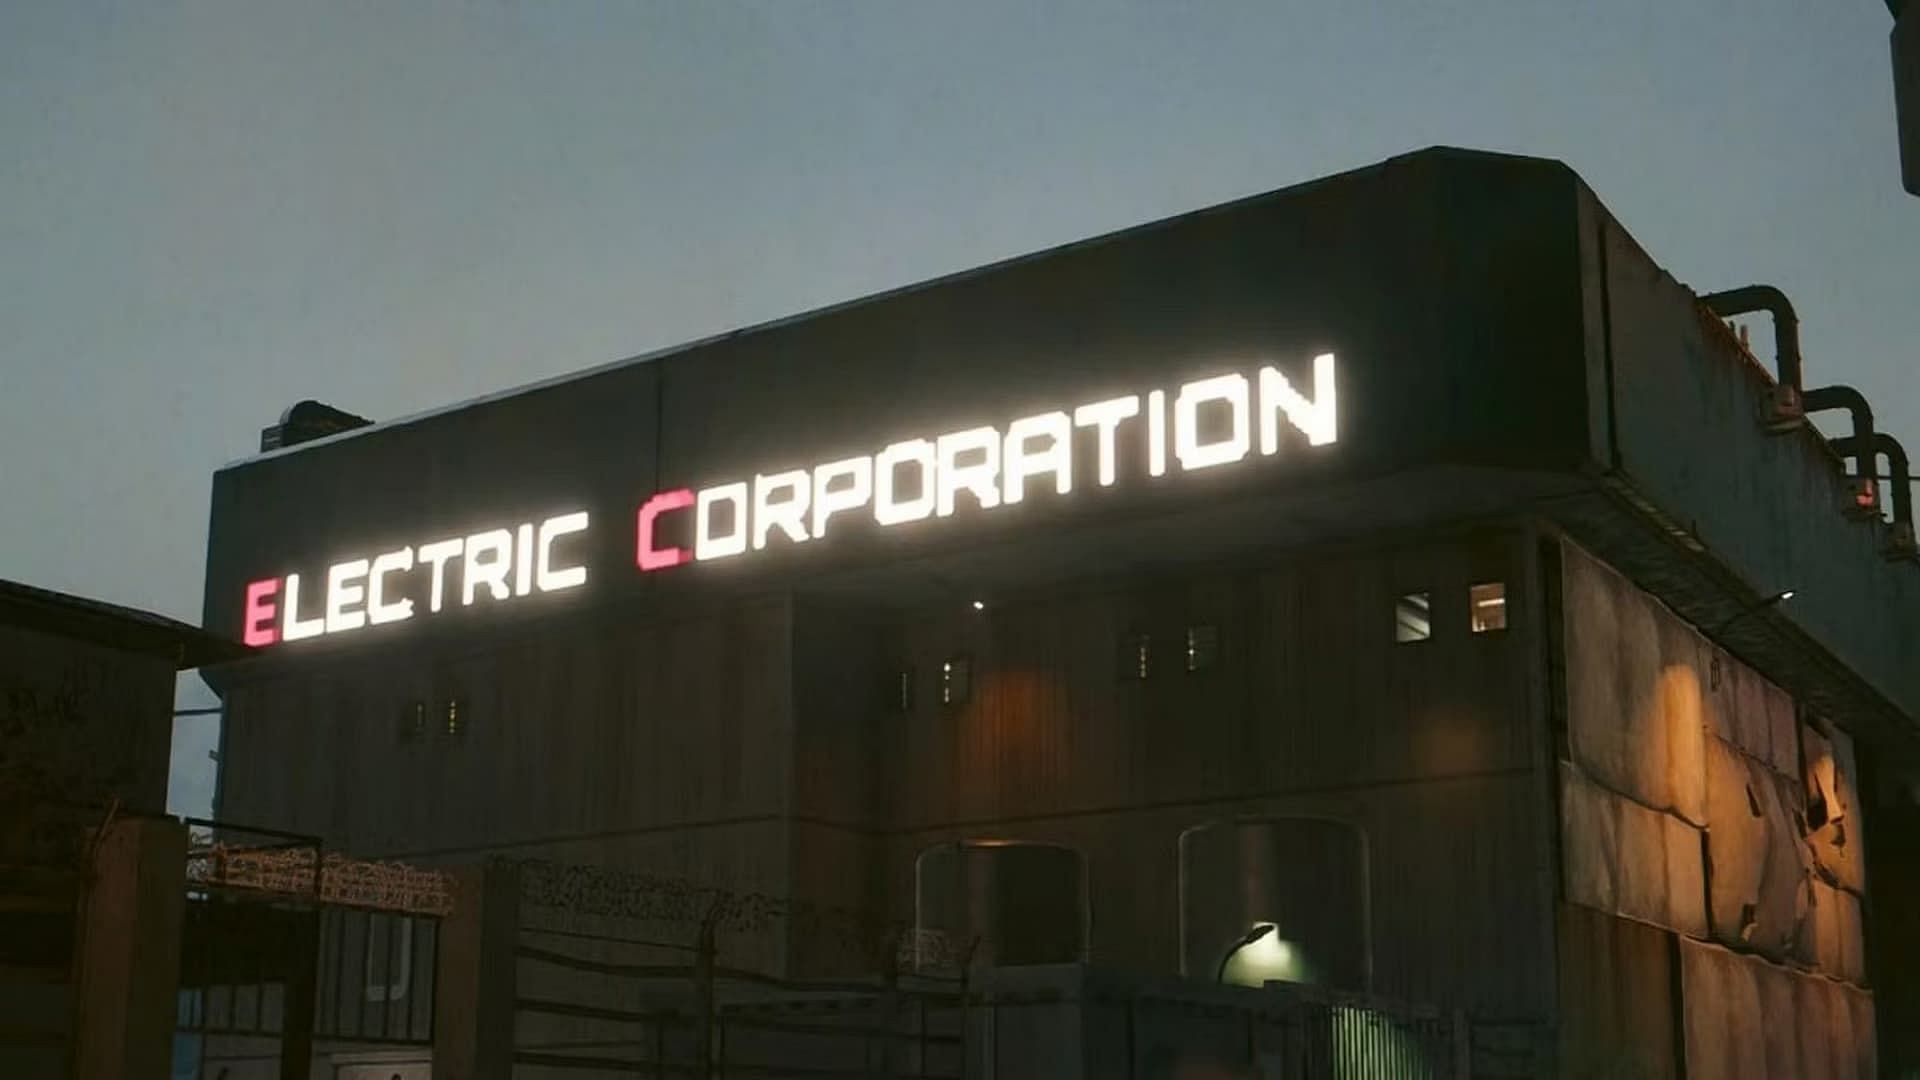 Fallout  Phantom Corporation